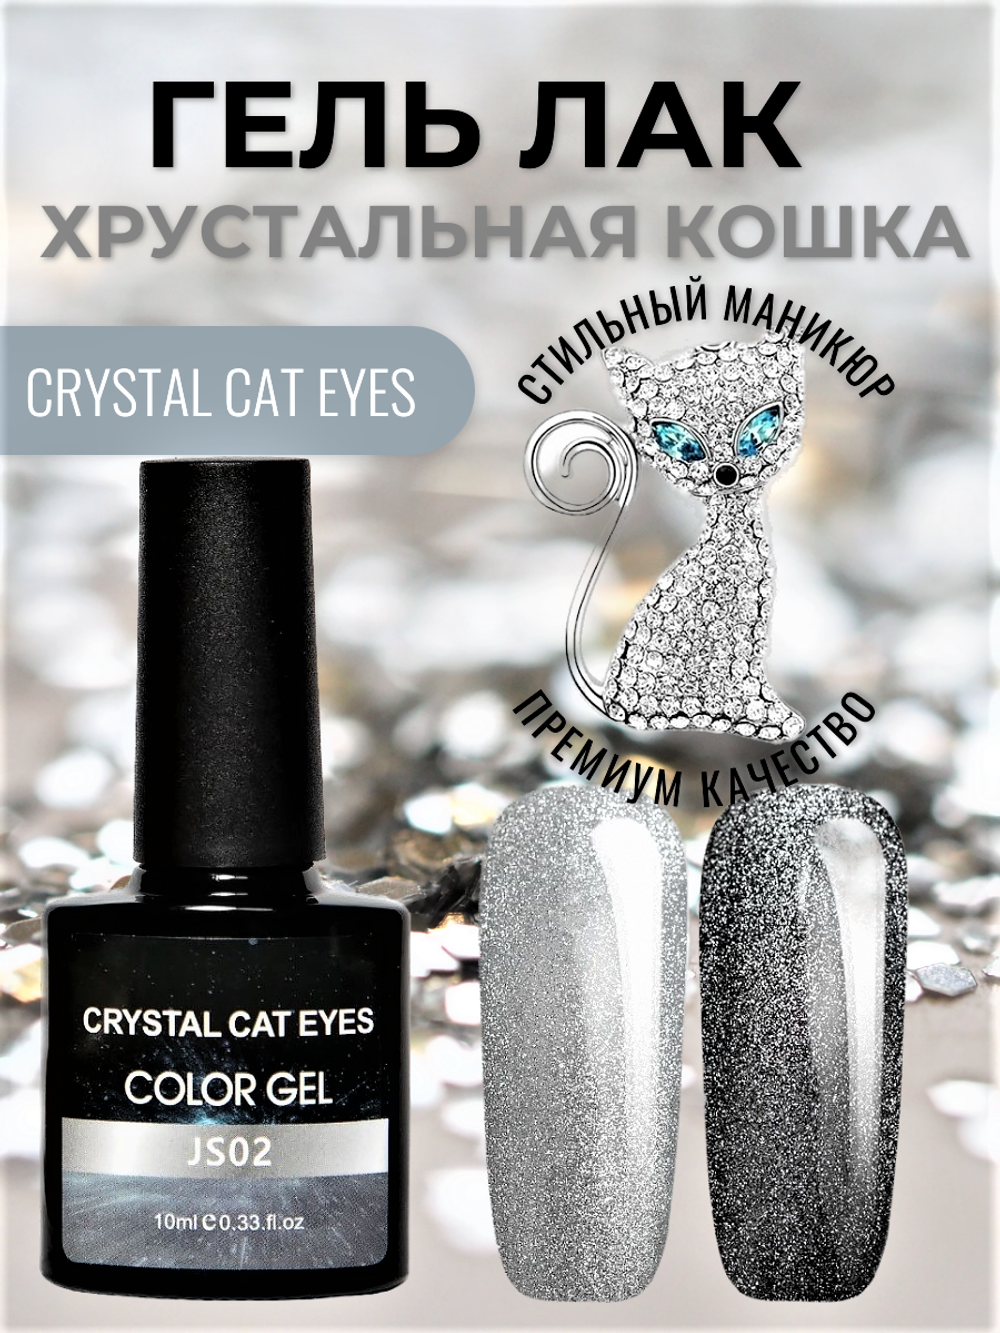 Гель лак кошачий глаз Crystal cat eyes JS02 (хрустальная кошка), 10 мл